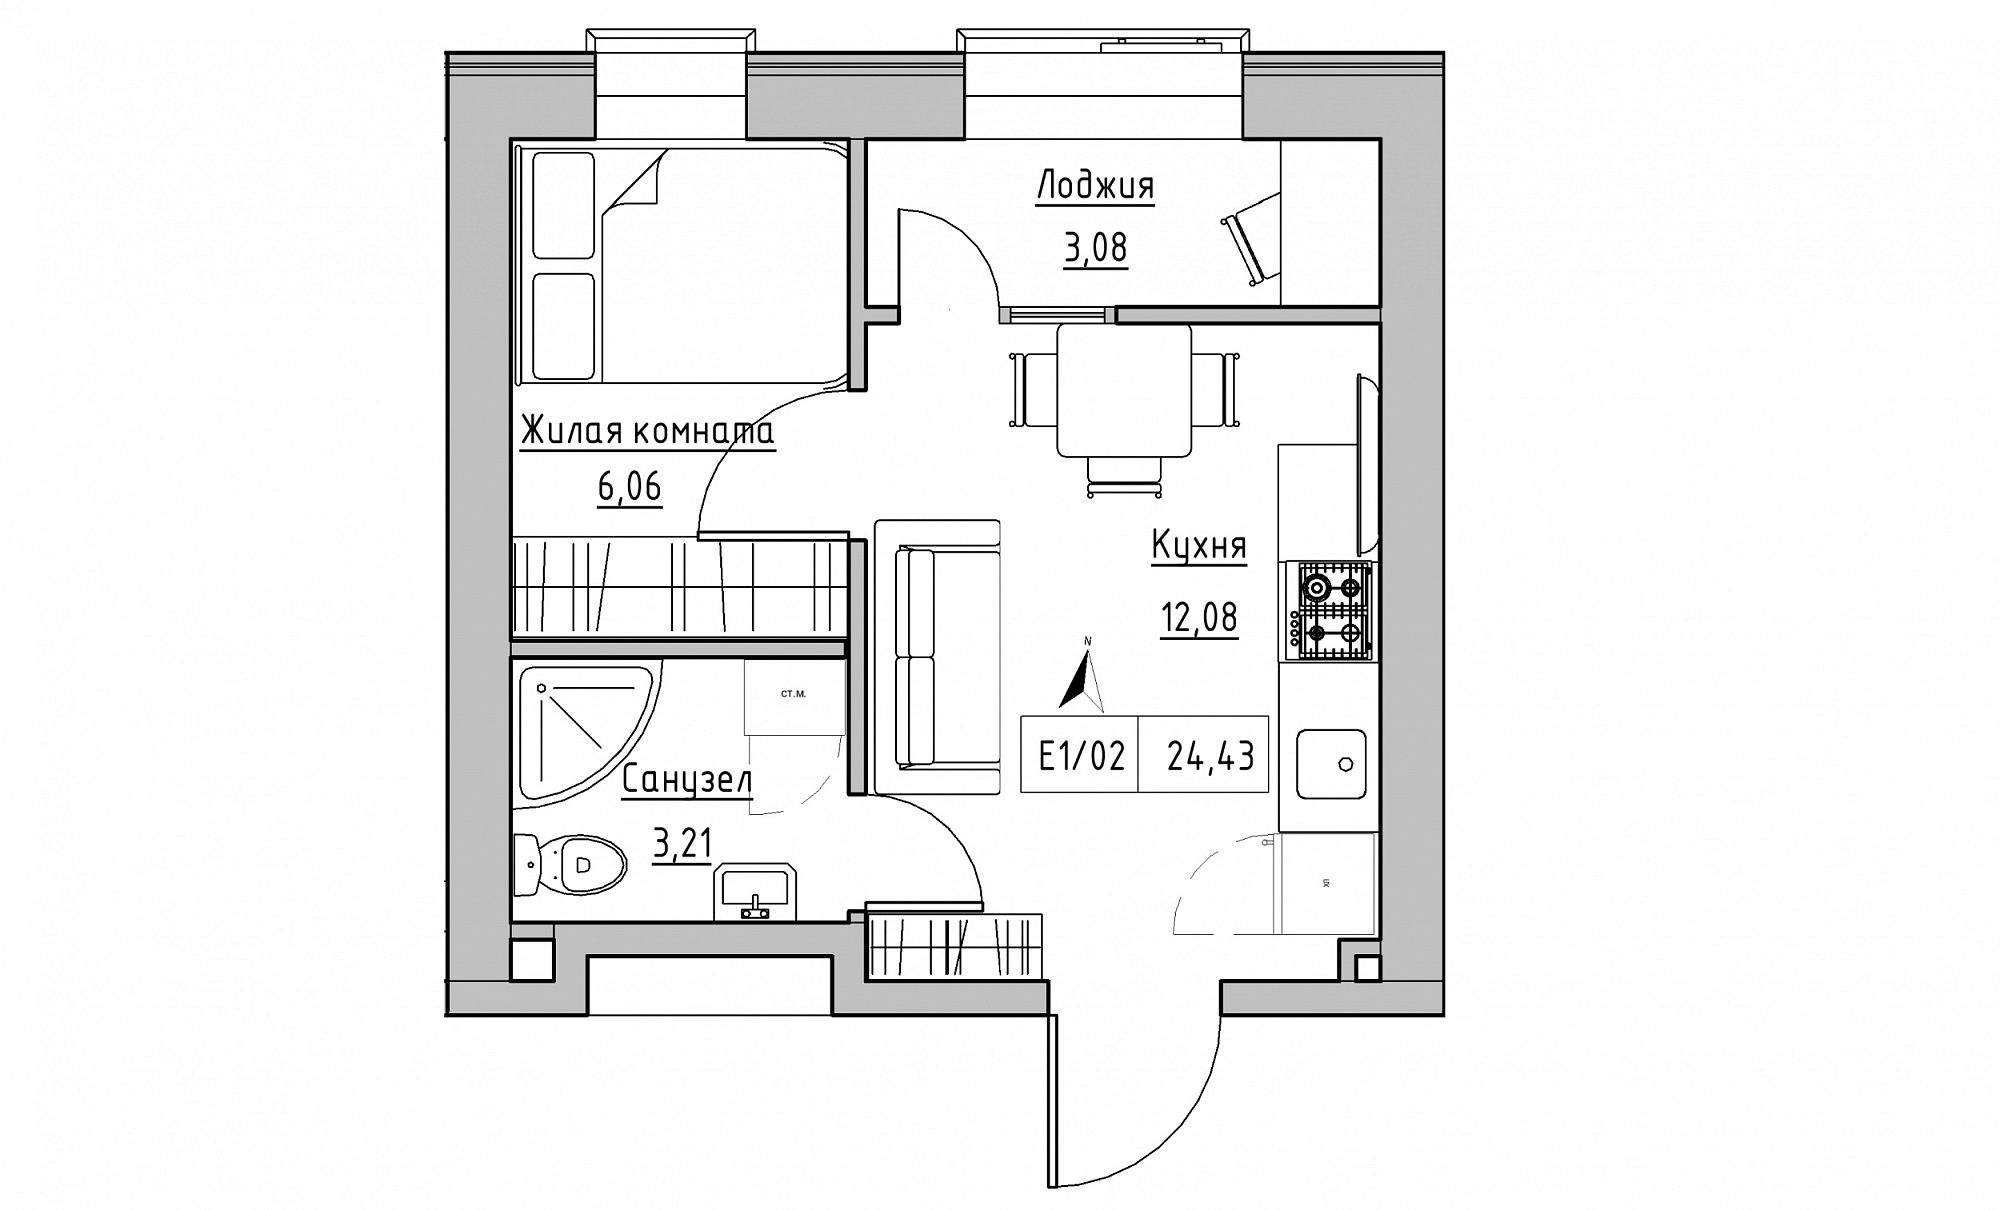 Planning 1-rm flats area 24.43m2, KS-015-05/0017.